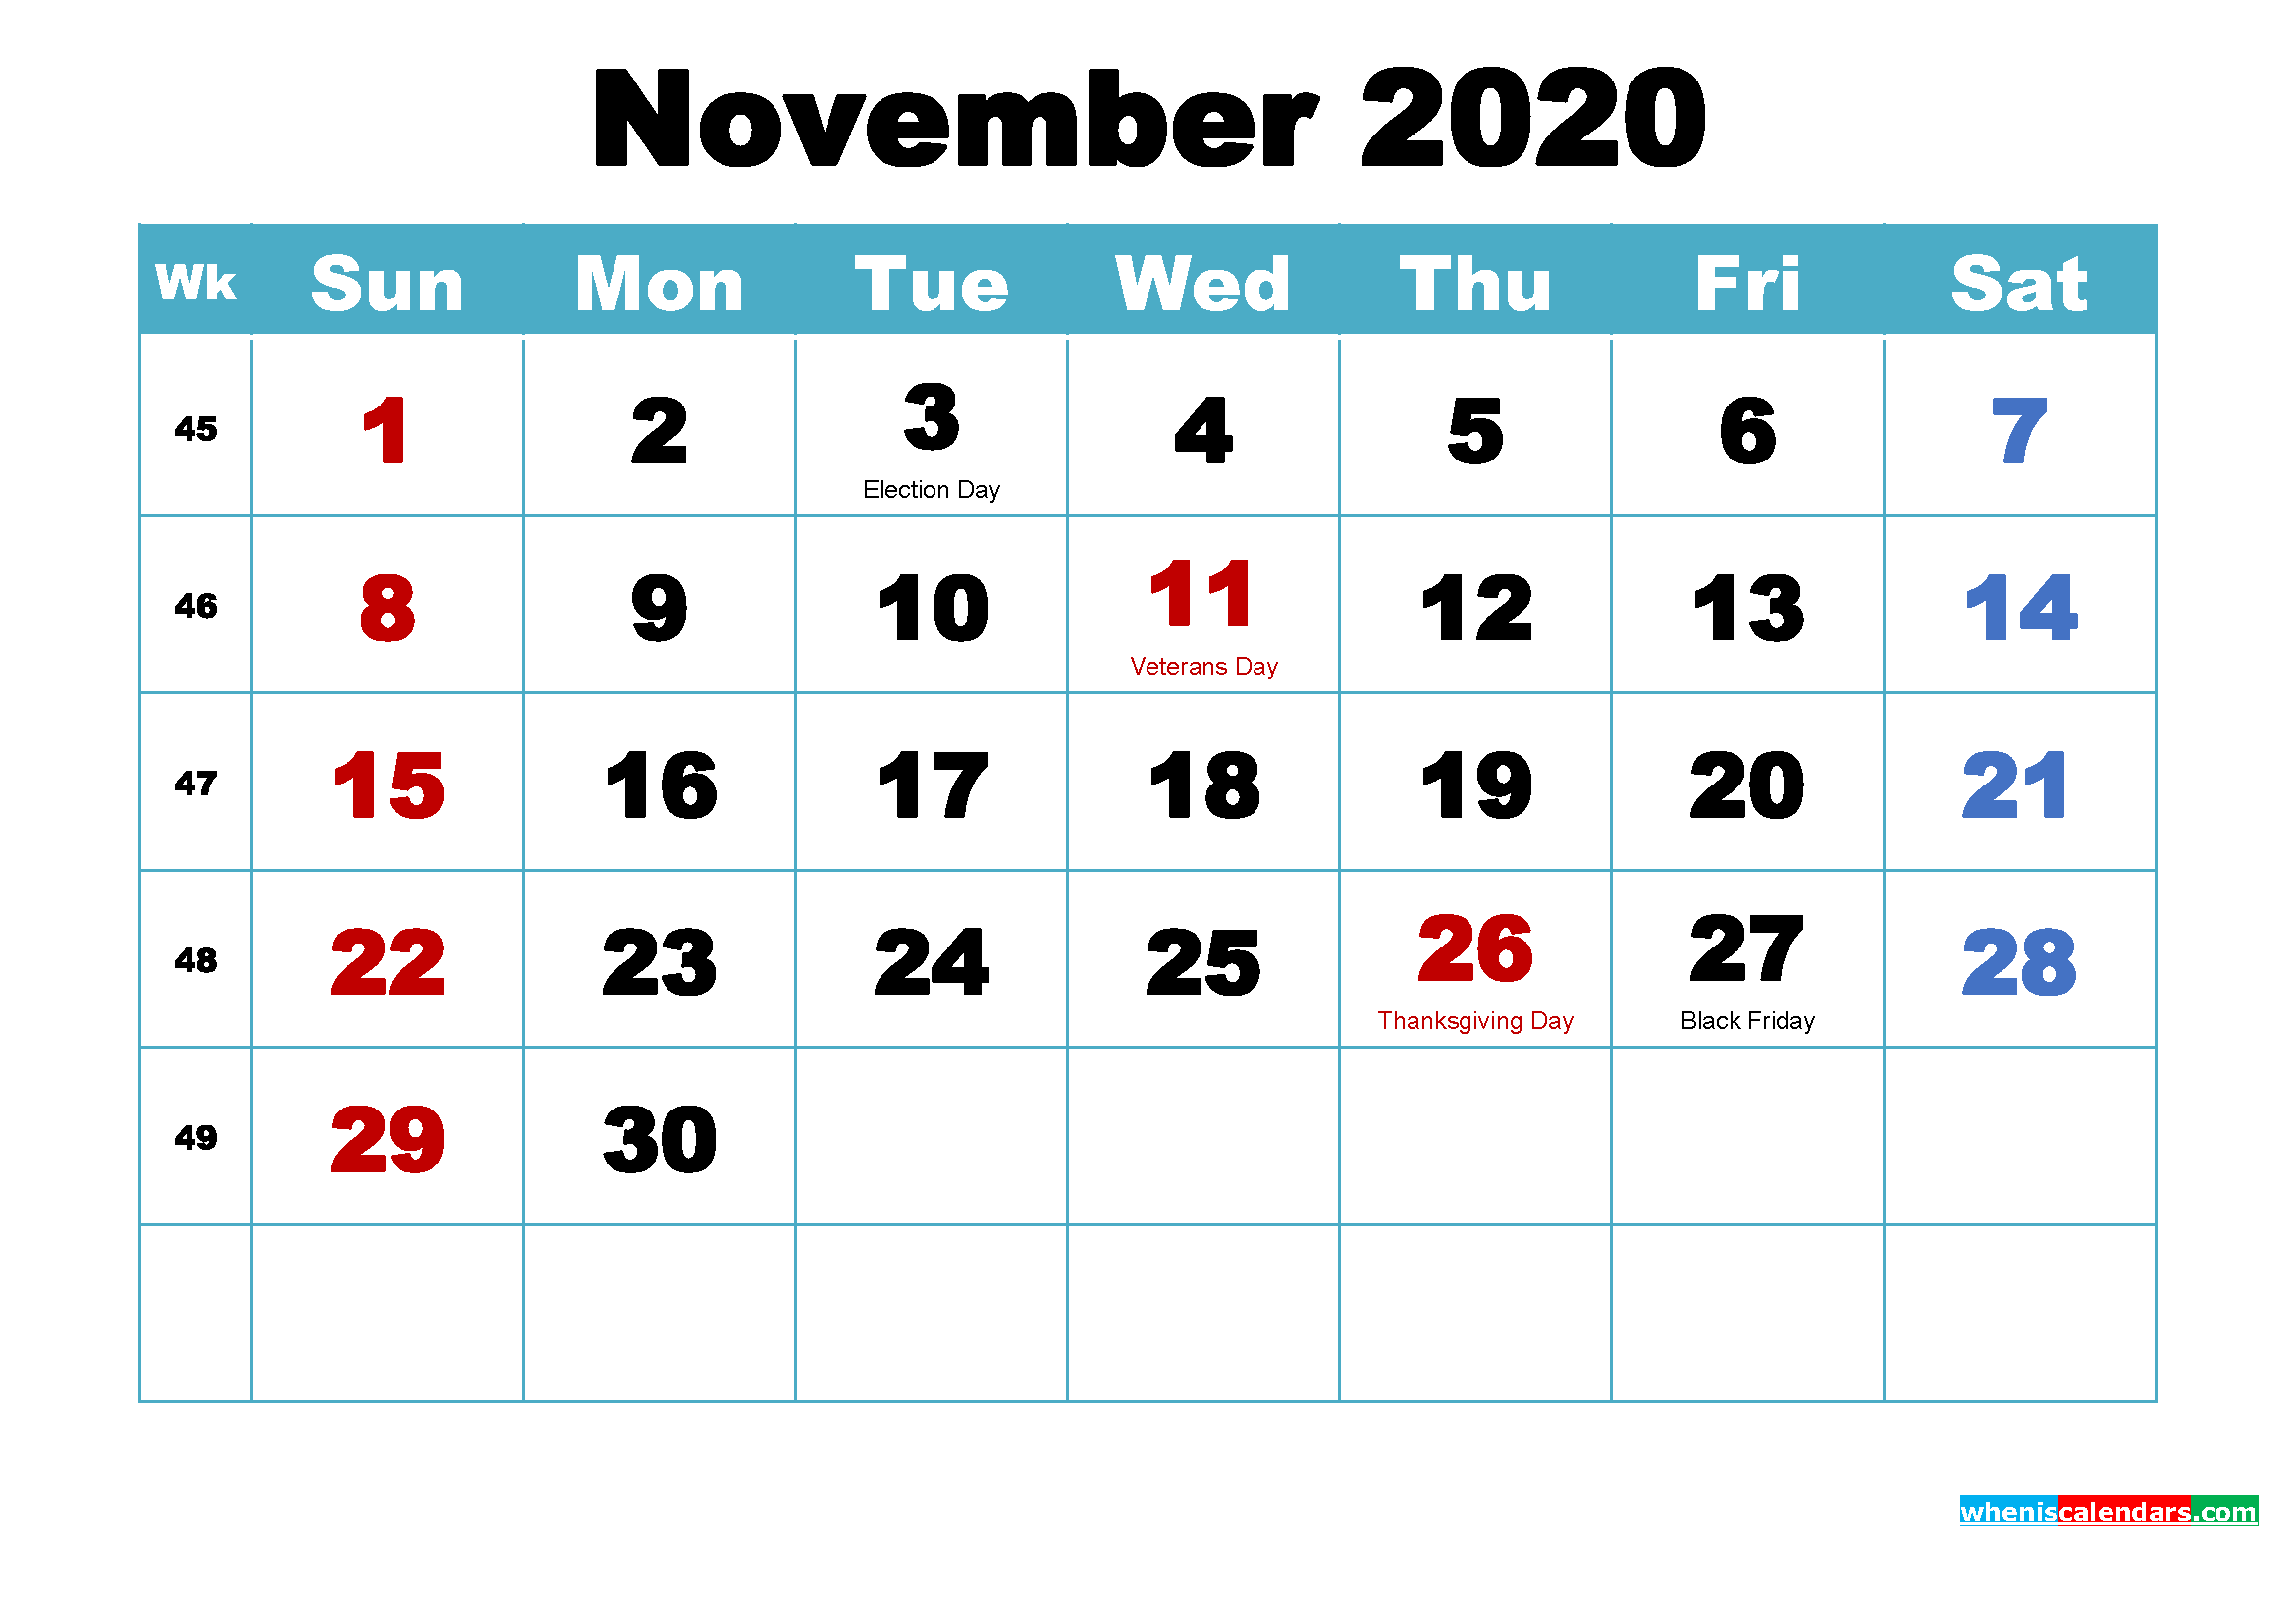 November 2020 Calendar Wallpaper Free Download